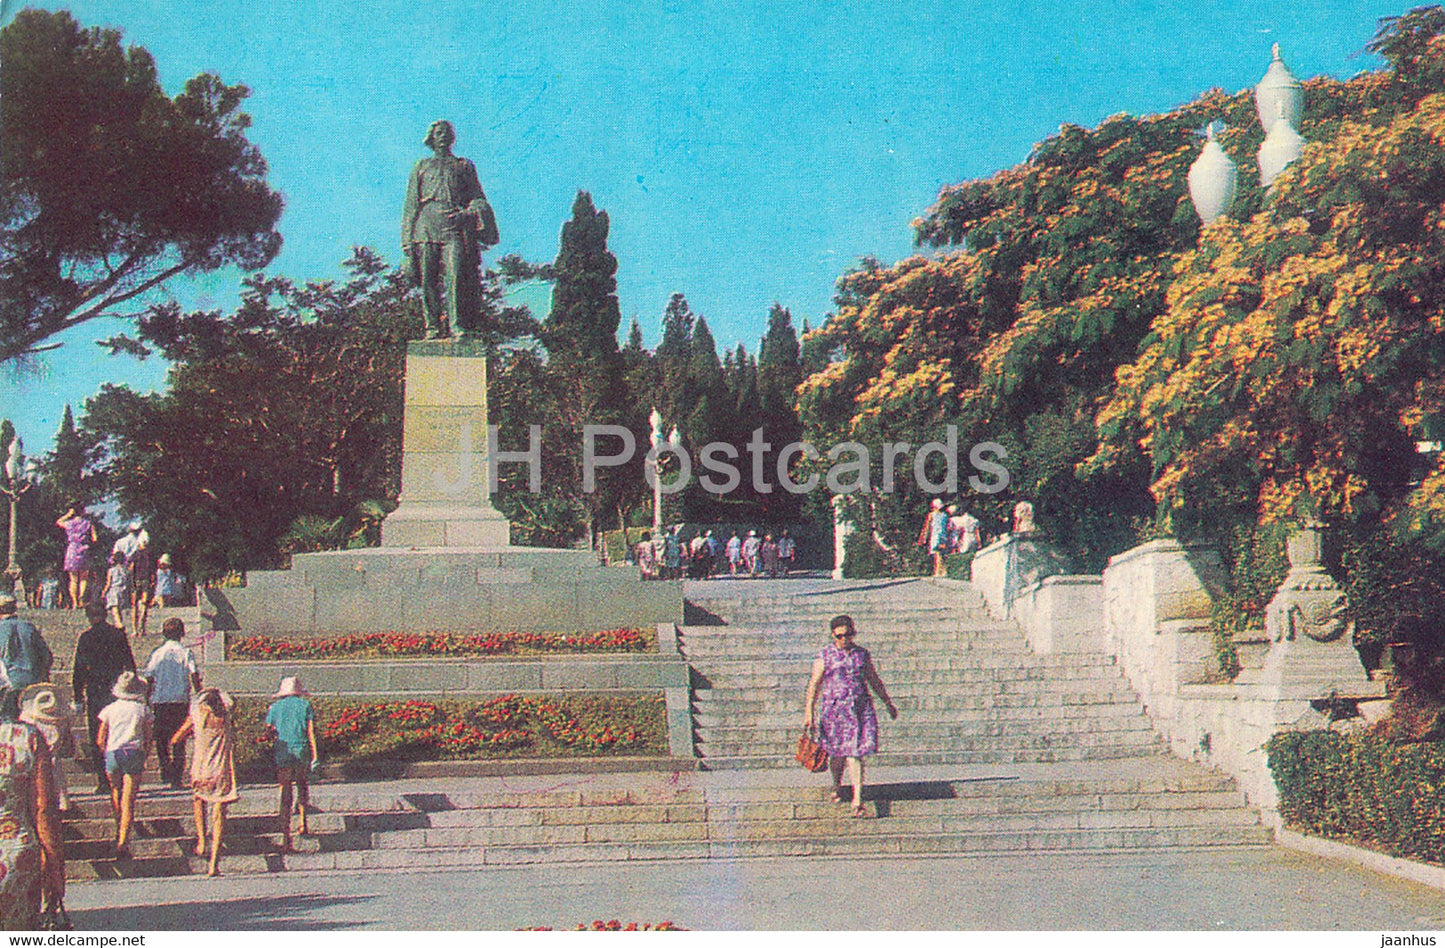 Yalta - Crimea - monument to Russian writer Gorky - 1977 - Ukraine USSR - unused - JH Postcards